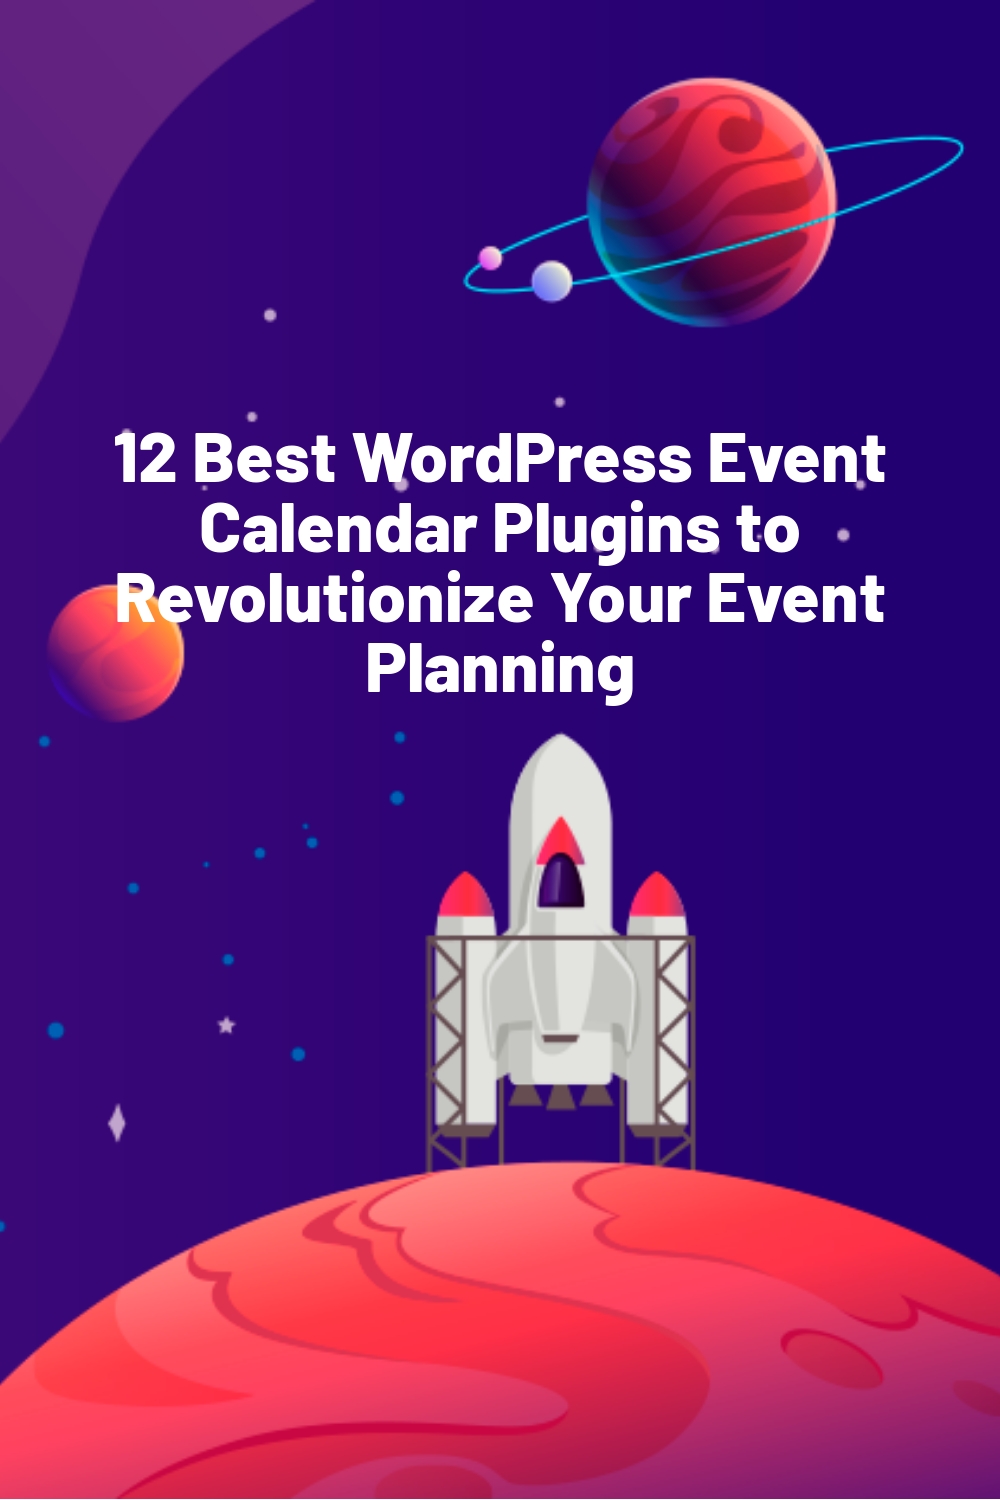 12 Best WordPress Event Calendar Plugins to Revolutionize Your Event Planning